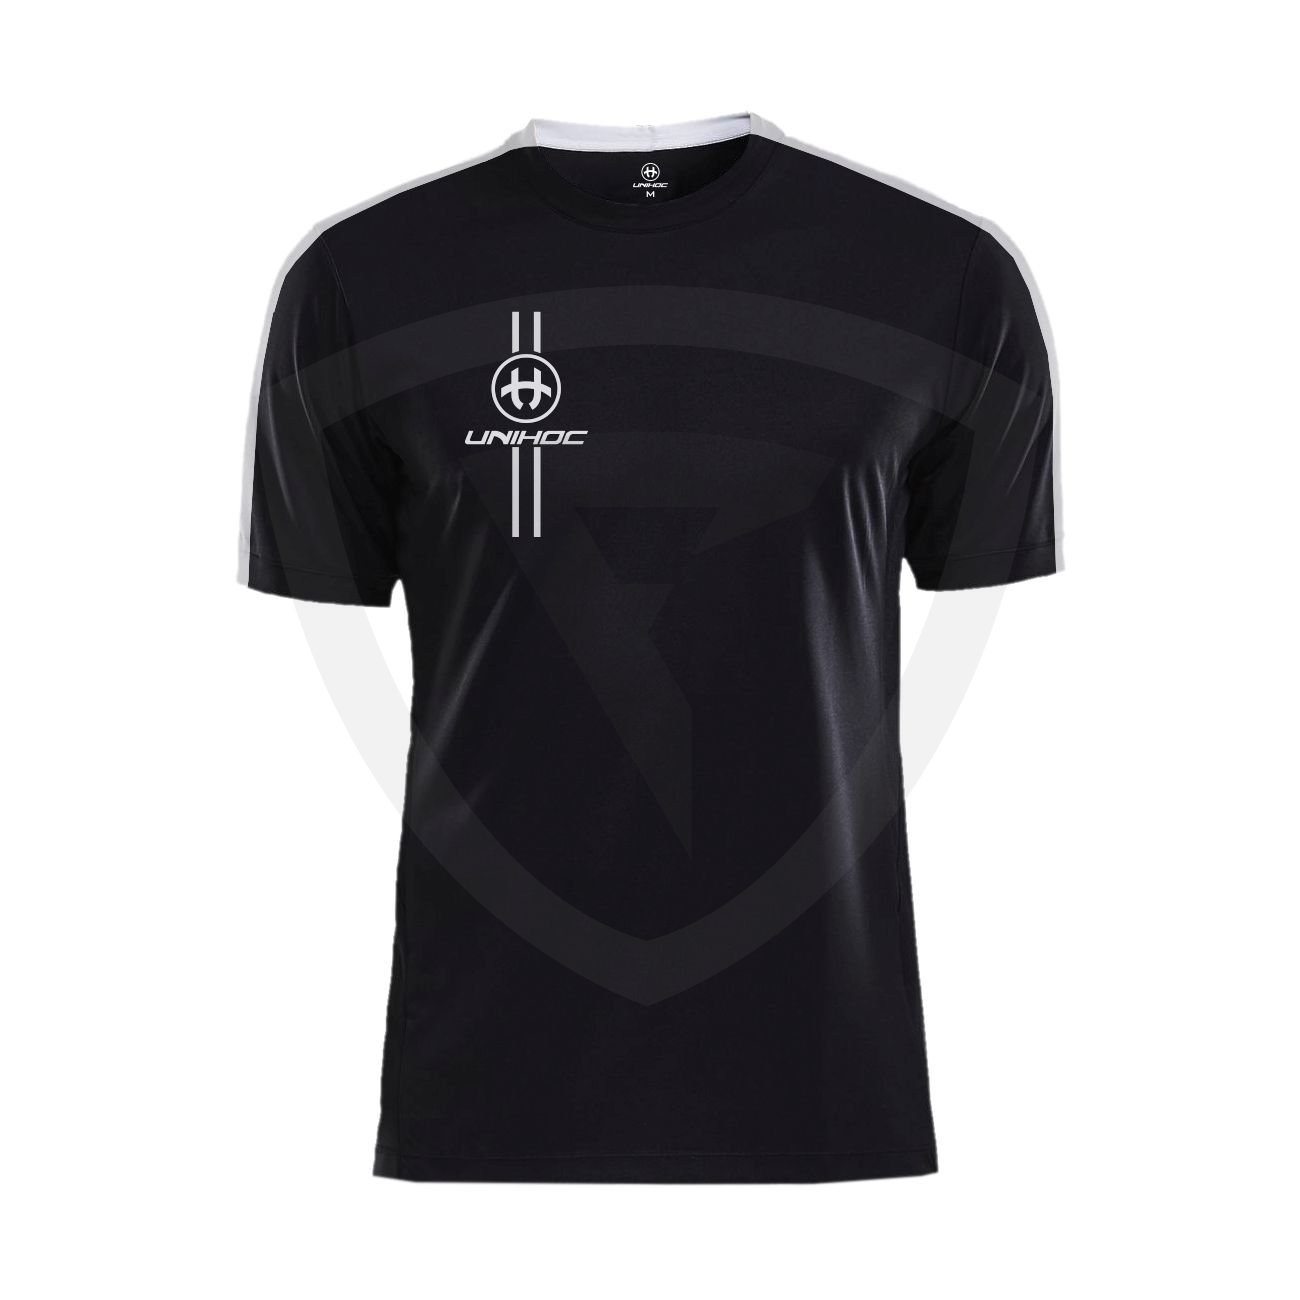 Unihoc Arrow T-shirt Black-White SR XS černá-bílá